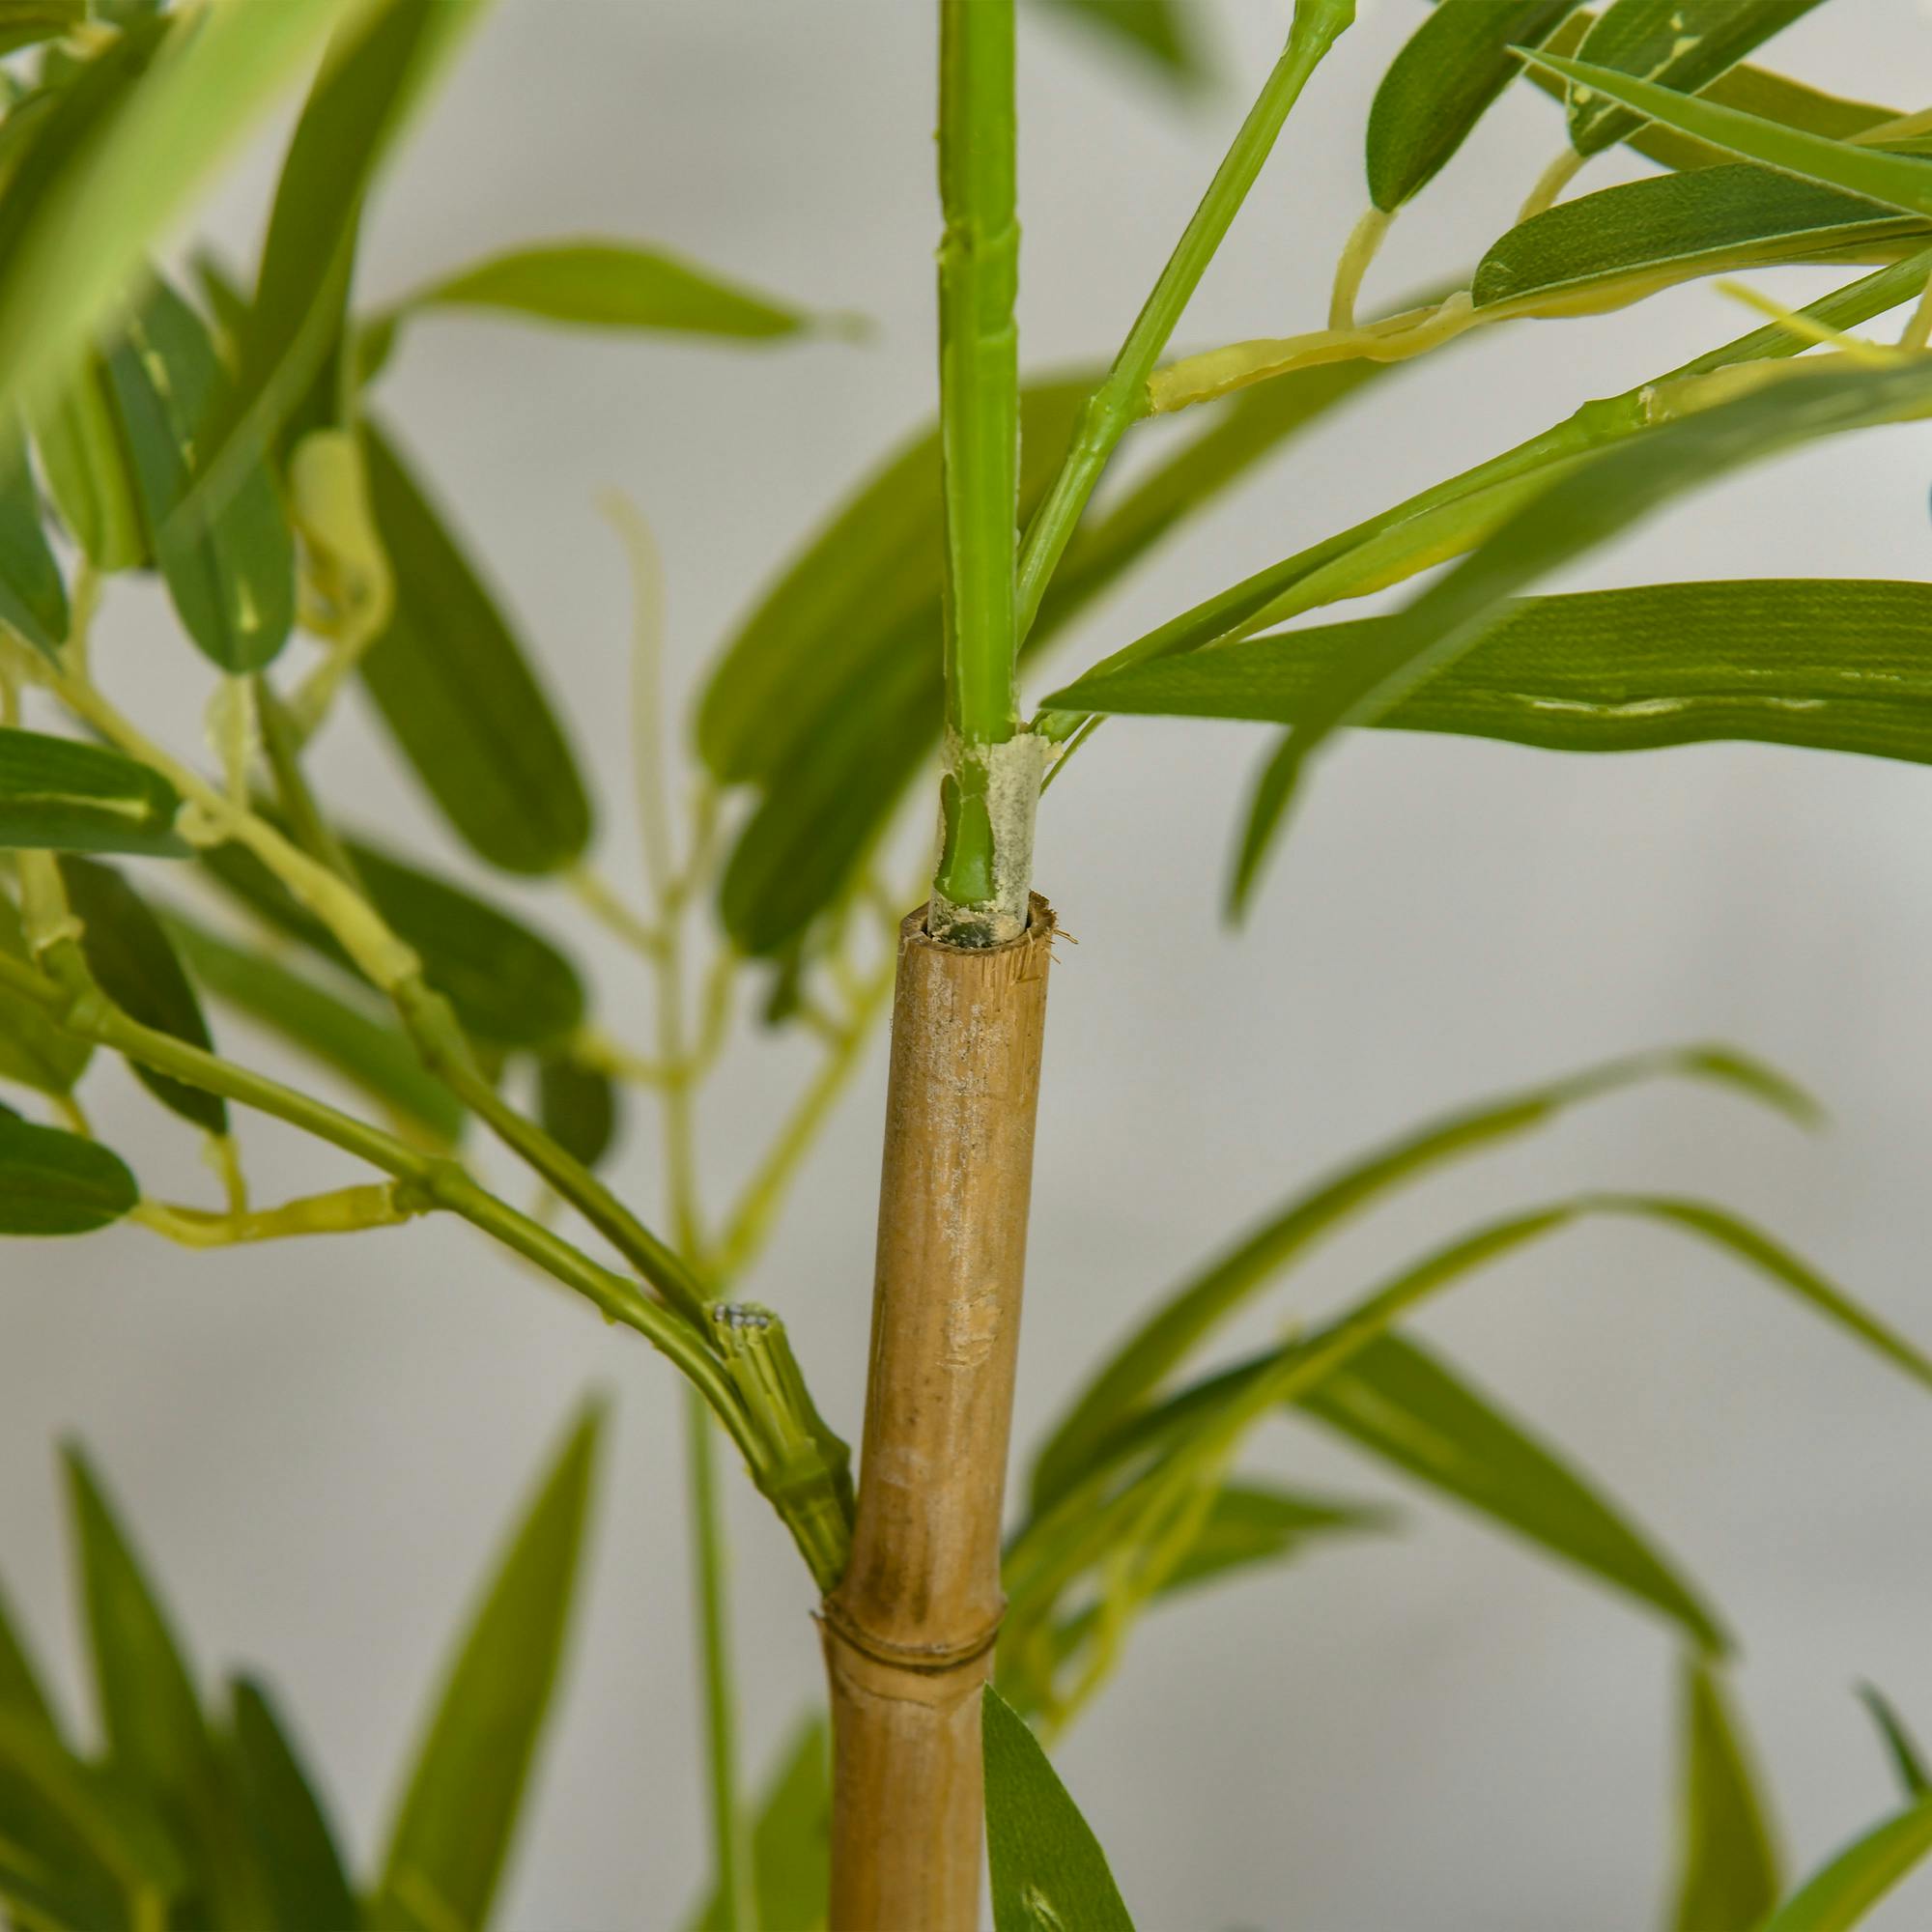 HOMCOM Pianta di Bambù Finta da 150cm con Vaso Nero, Pianta